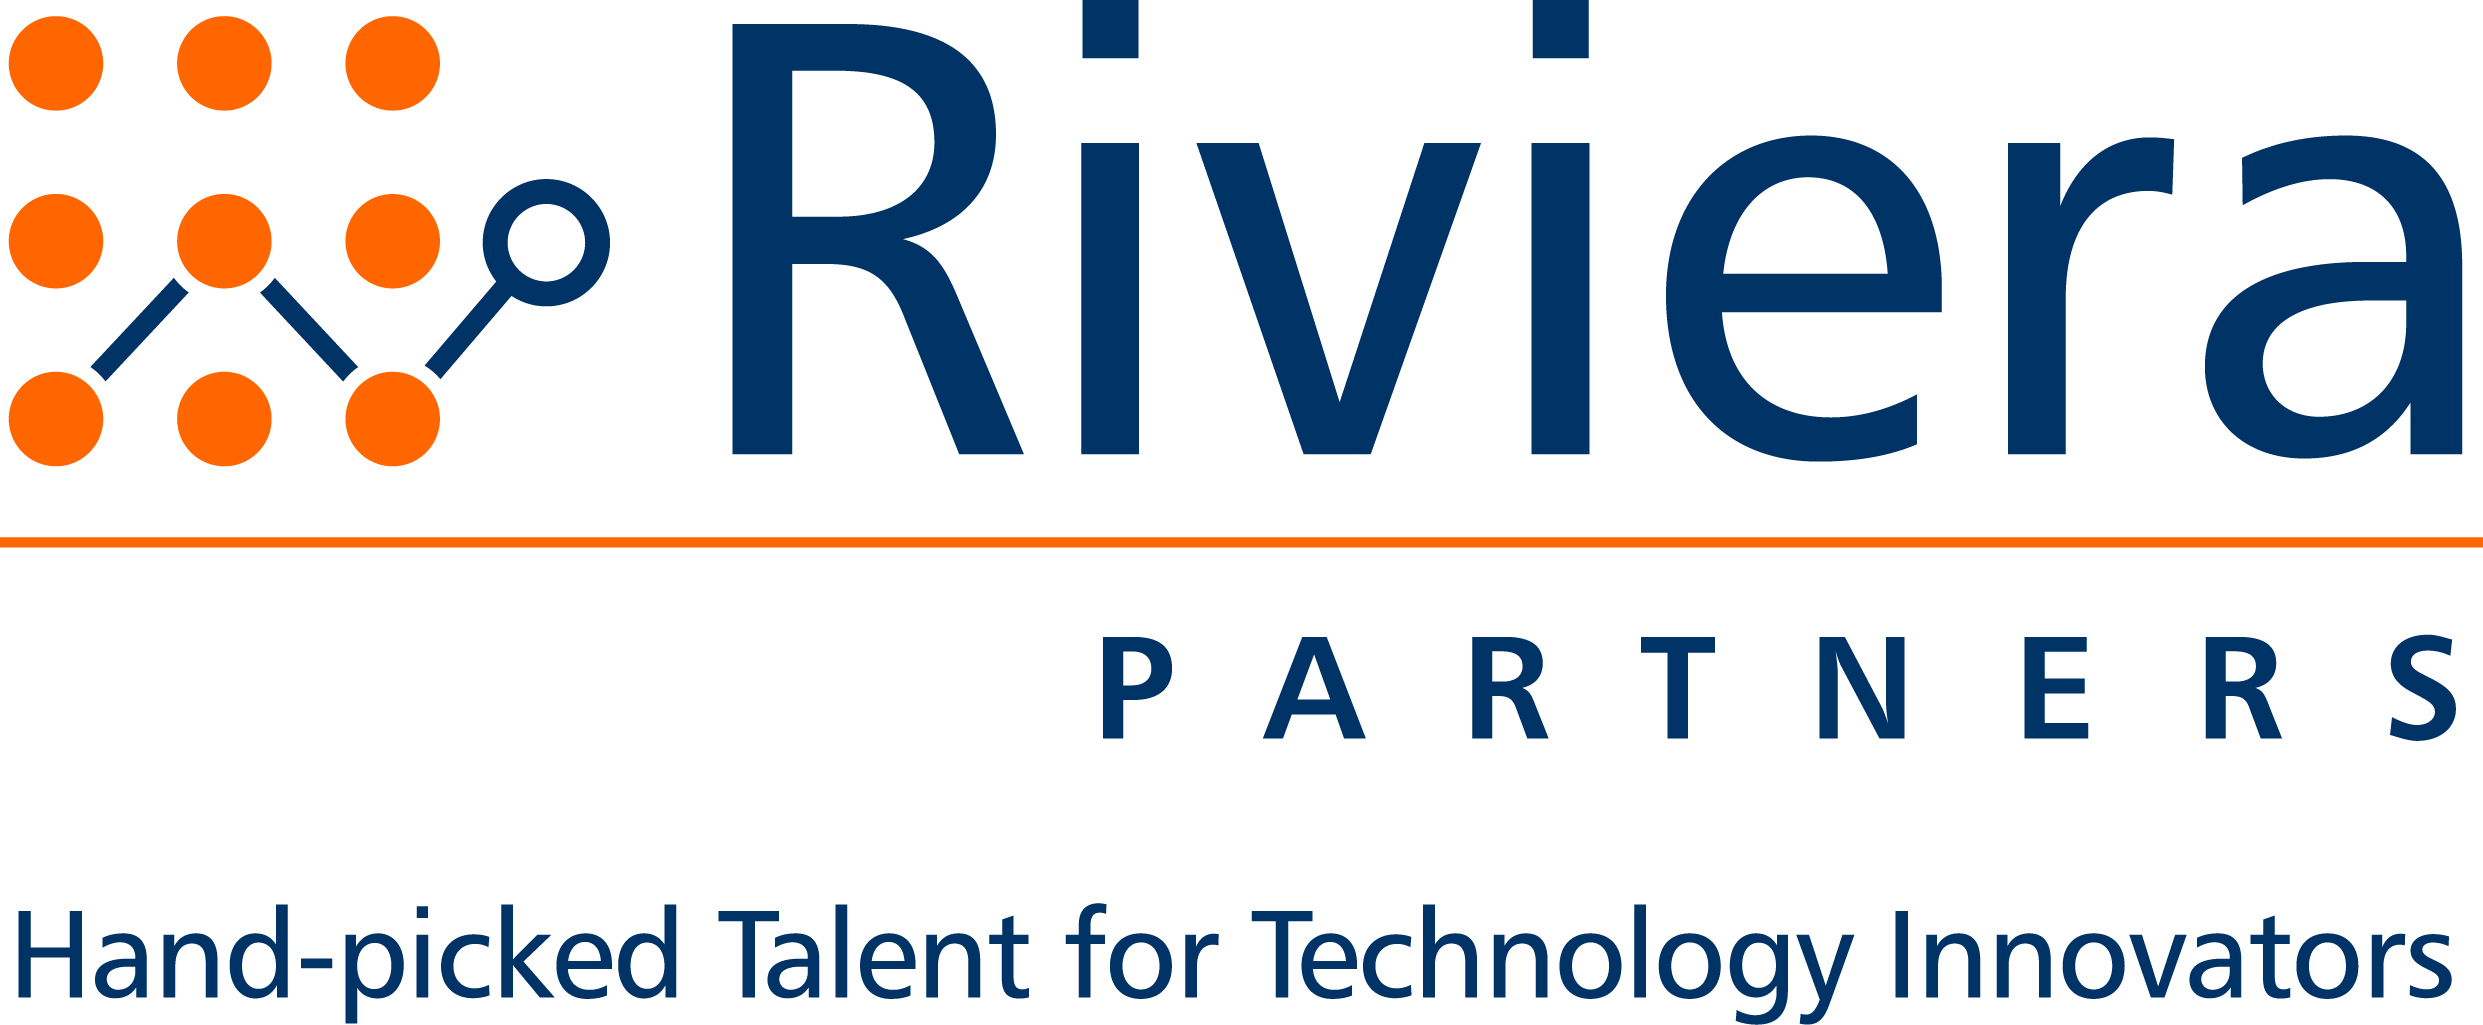 Riviera Partners, a 